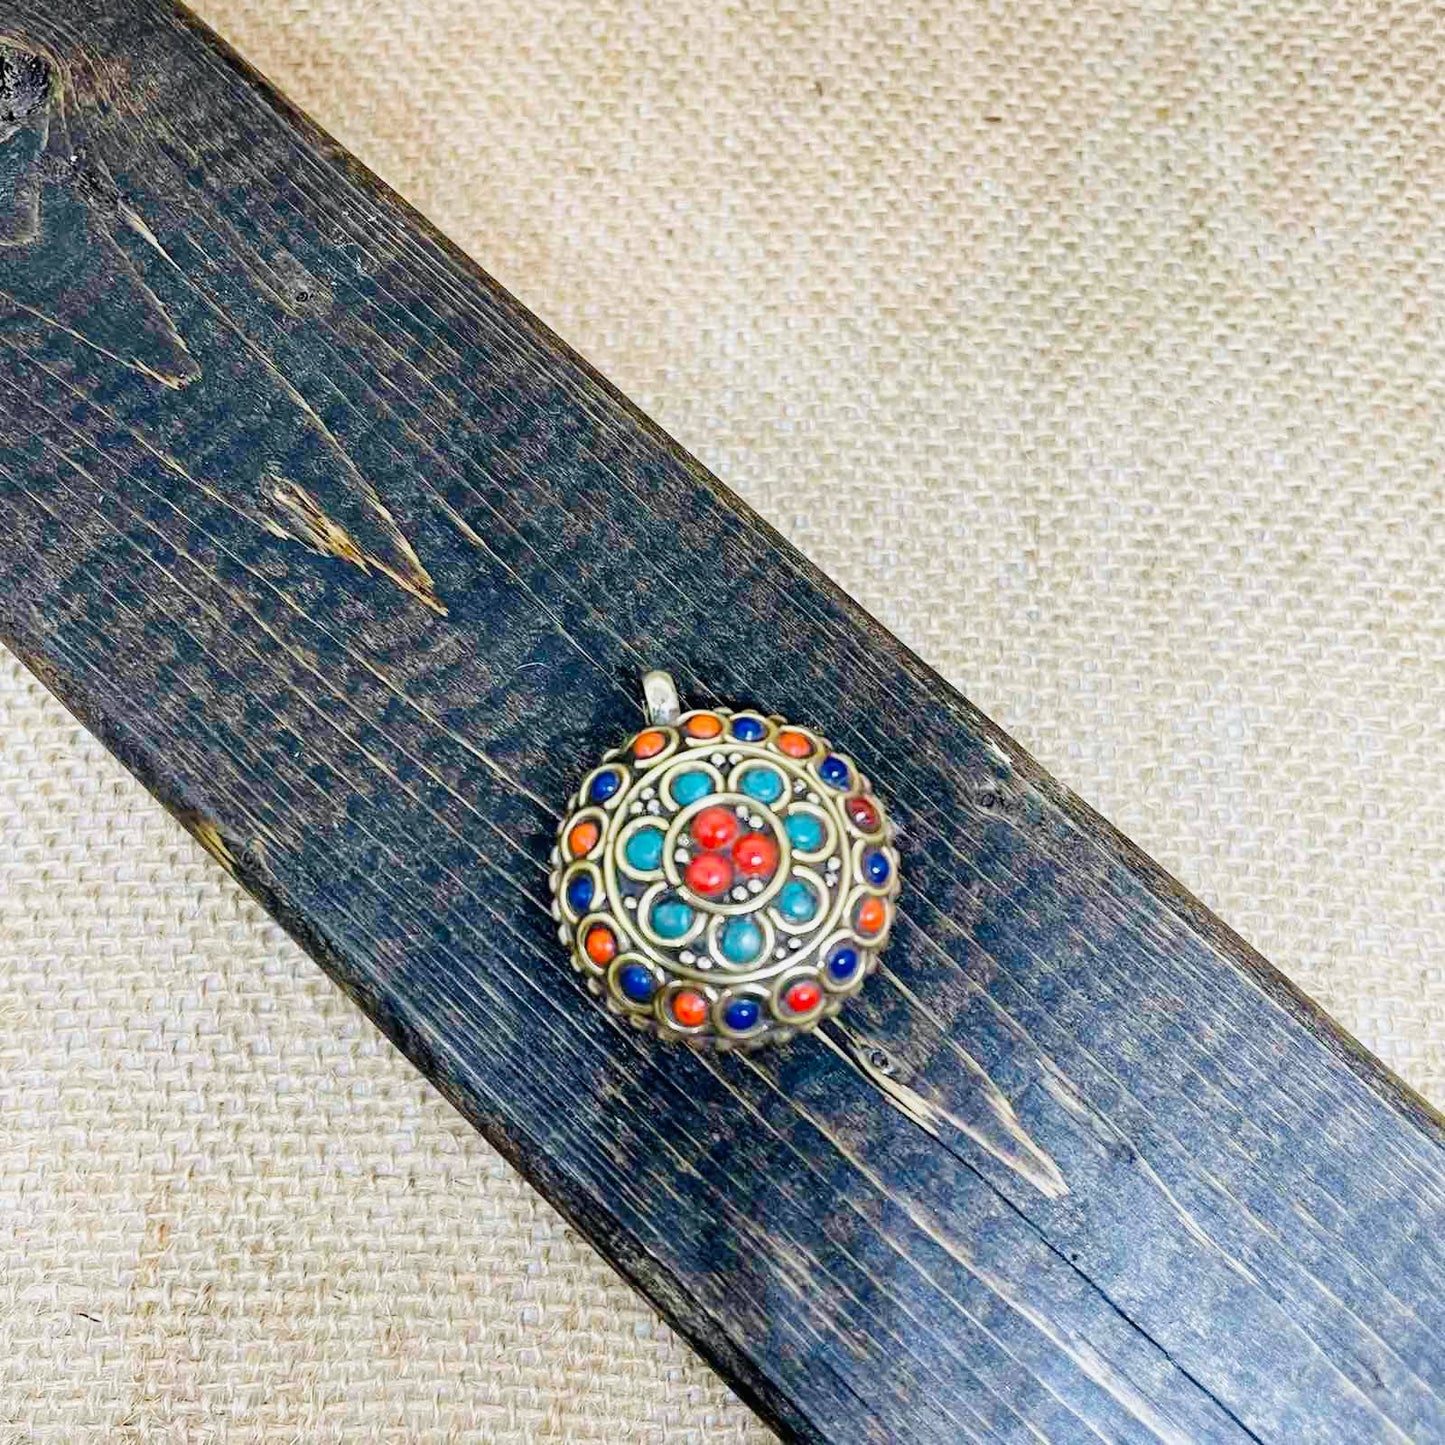 Ethnic Round Pendant, Turquoise Coral Lapis Lazuli Charms, Bohemian Charms, Handmade Jewelry, Ying Yang Pendant